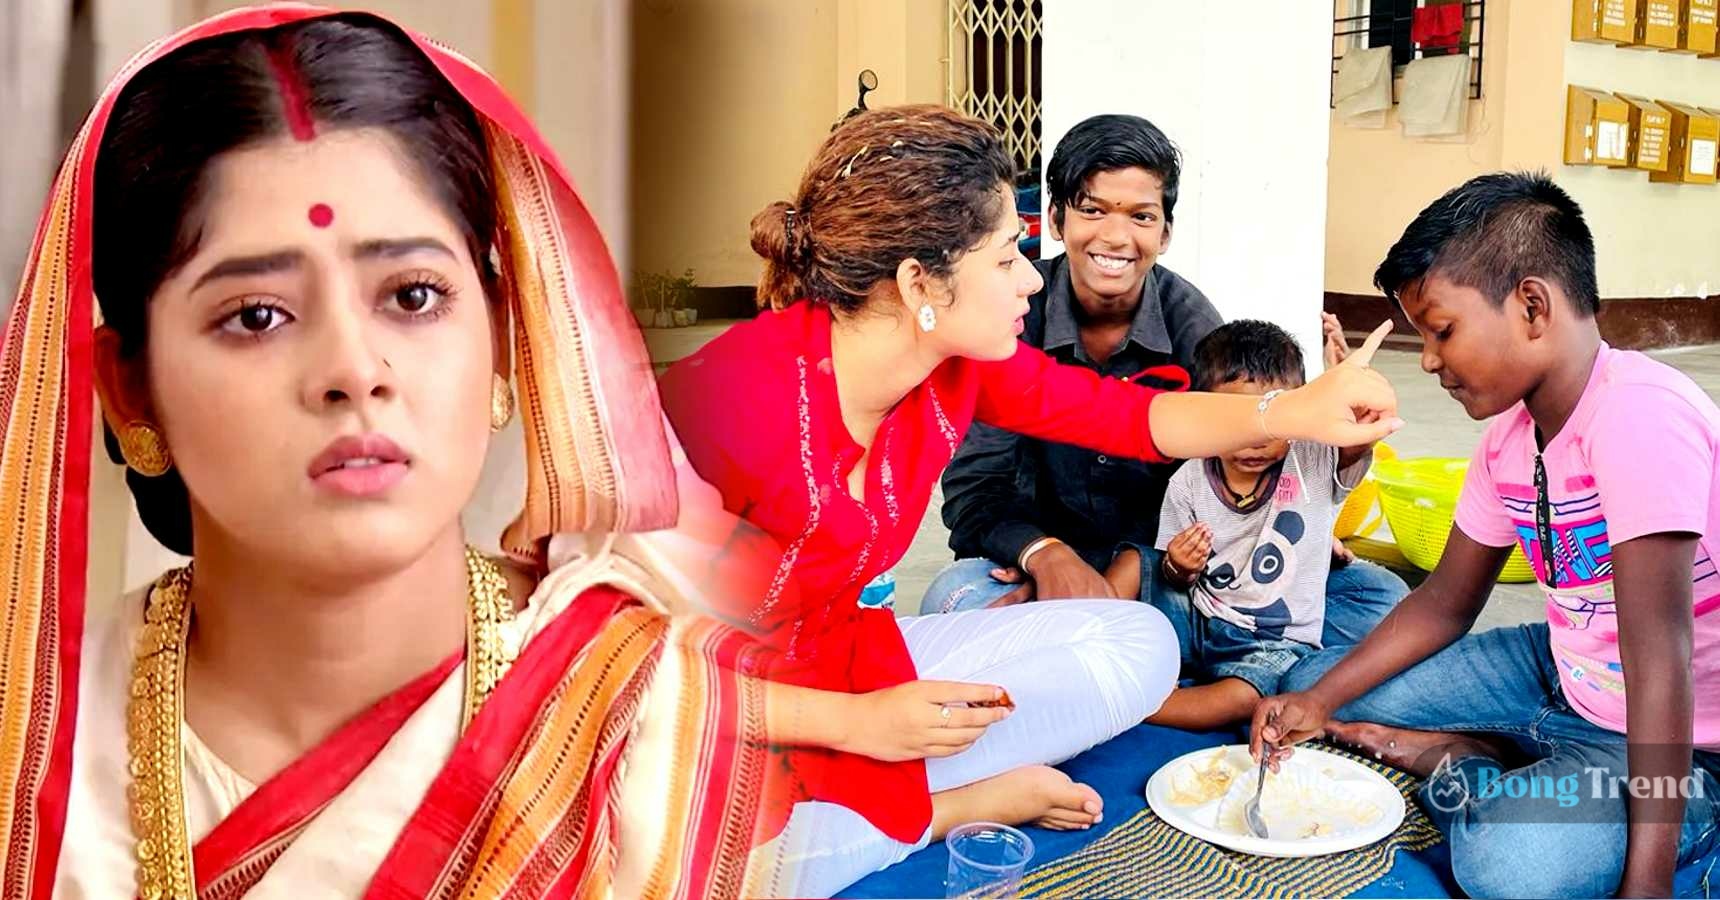 Rashmoni actress Ditipriya Roy brutally trolled on social media after giving bhaiphonta to street childrens